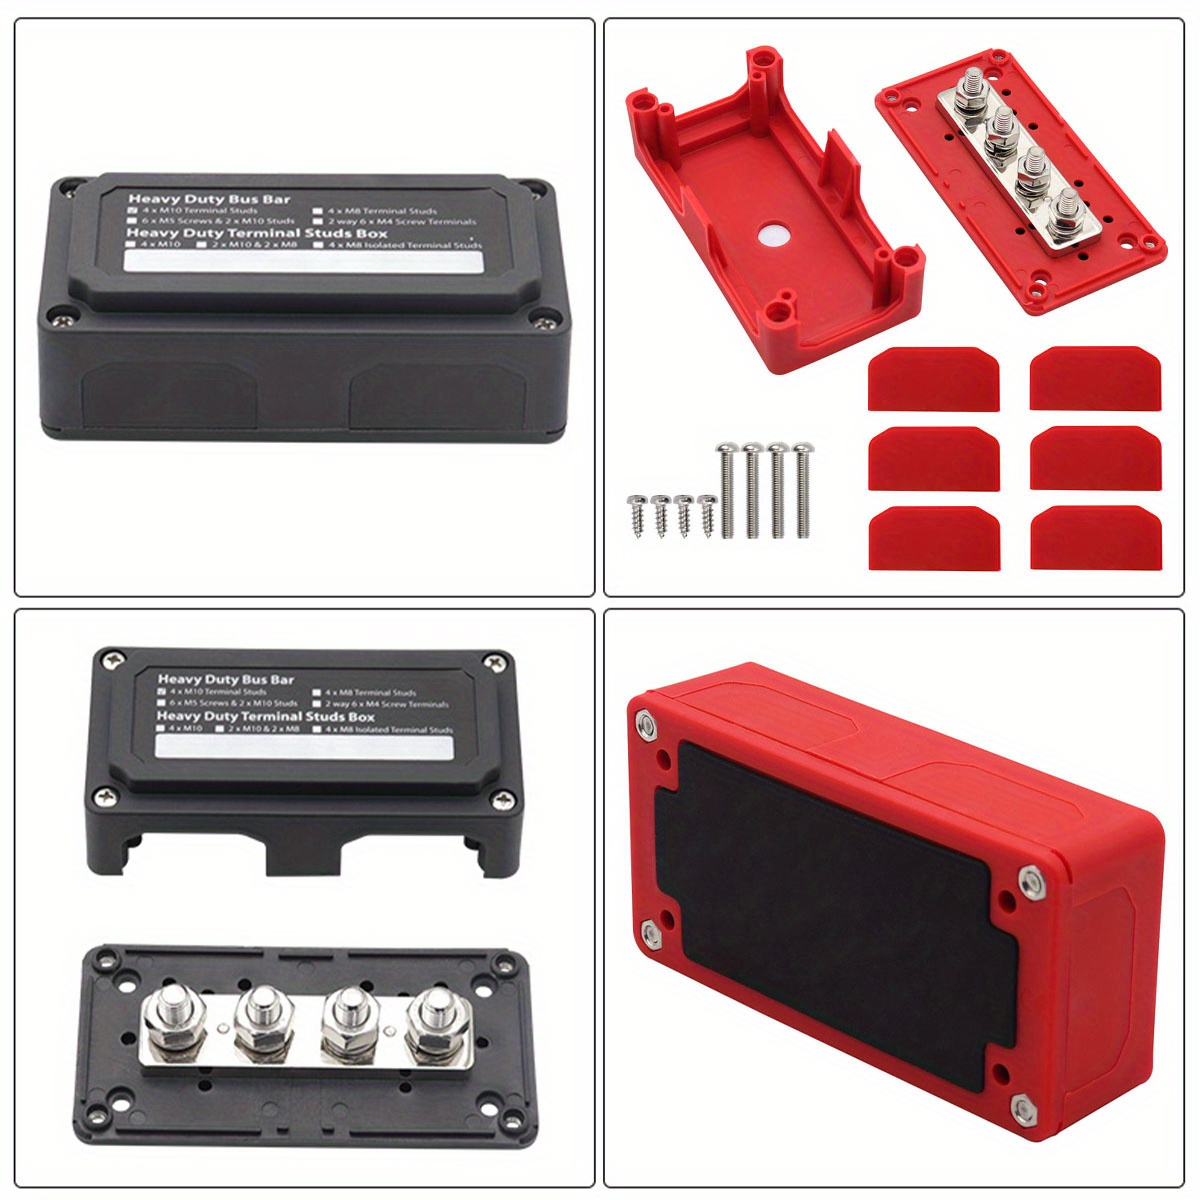  CITALL Universal Red 300A M8 Studs Bus Bar Power Distribution  Box Terminal Block : Electronics